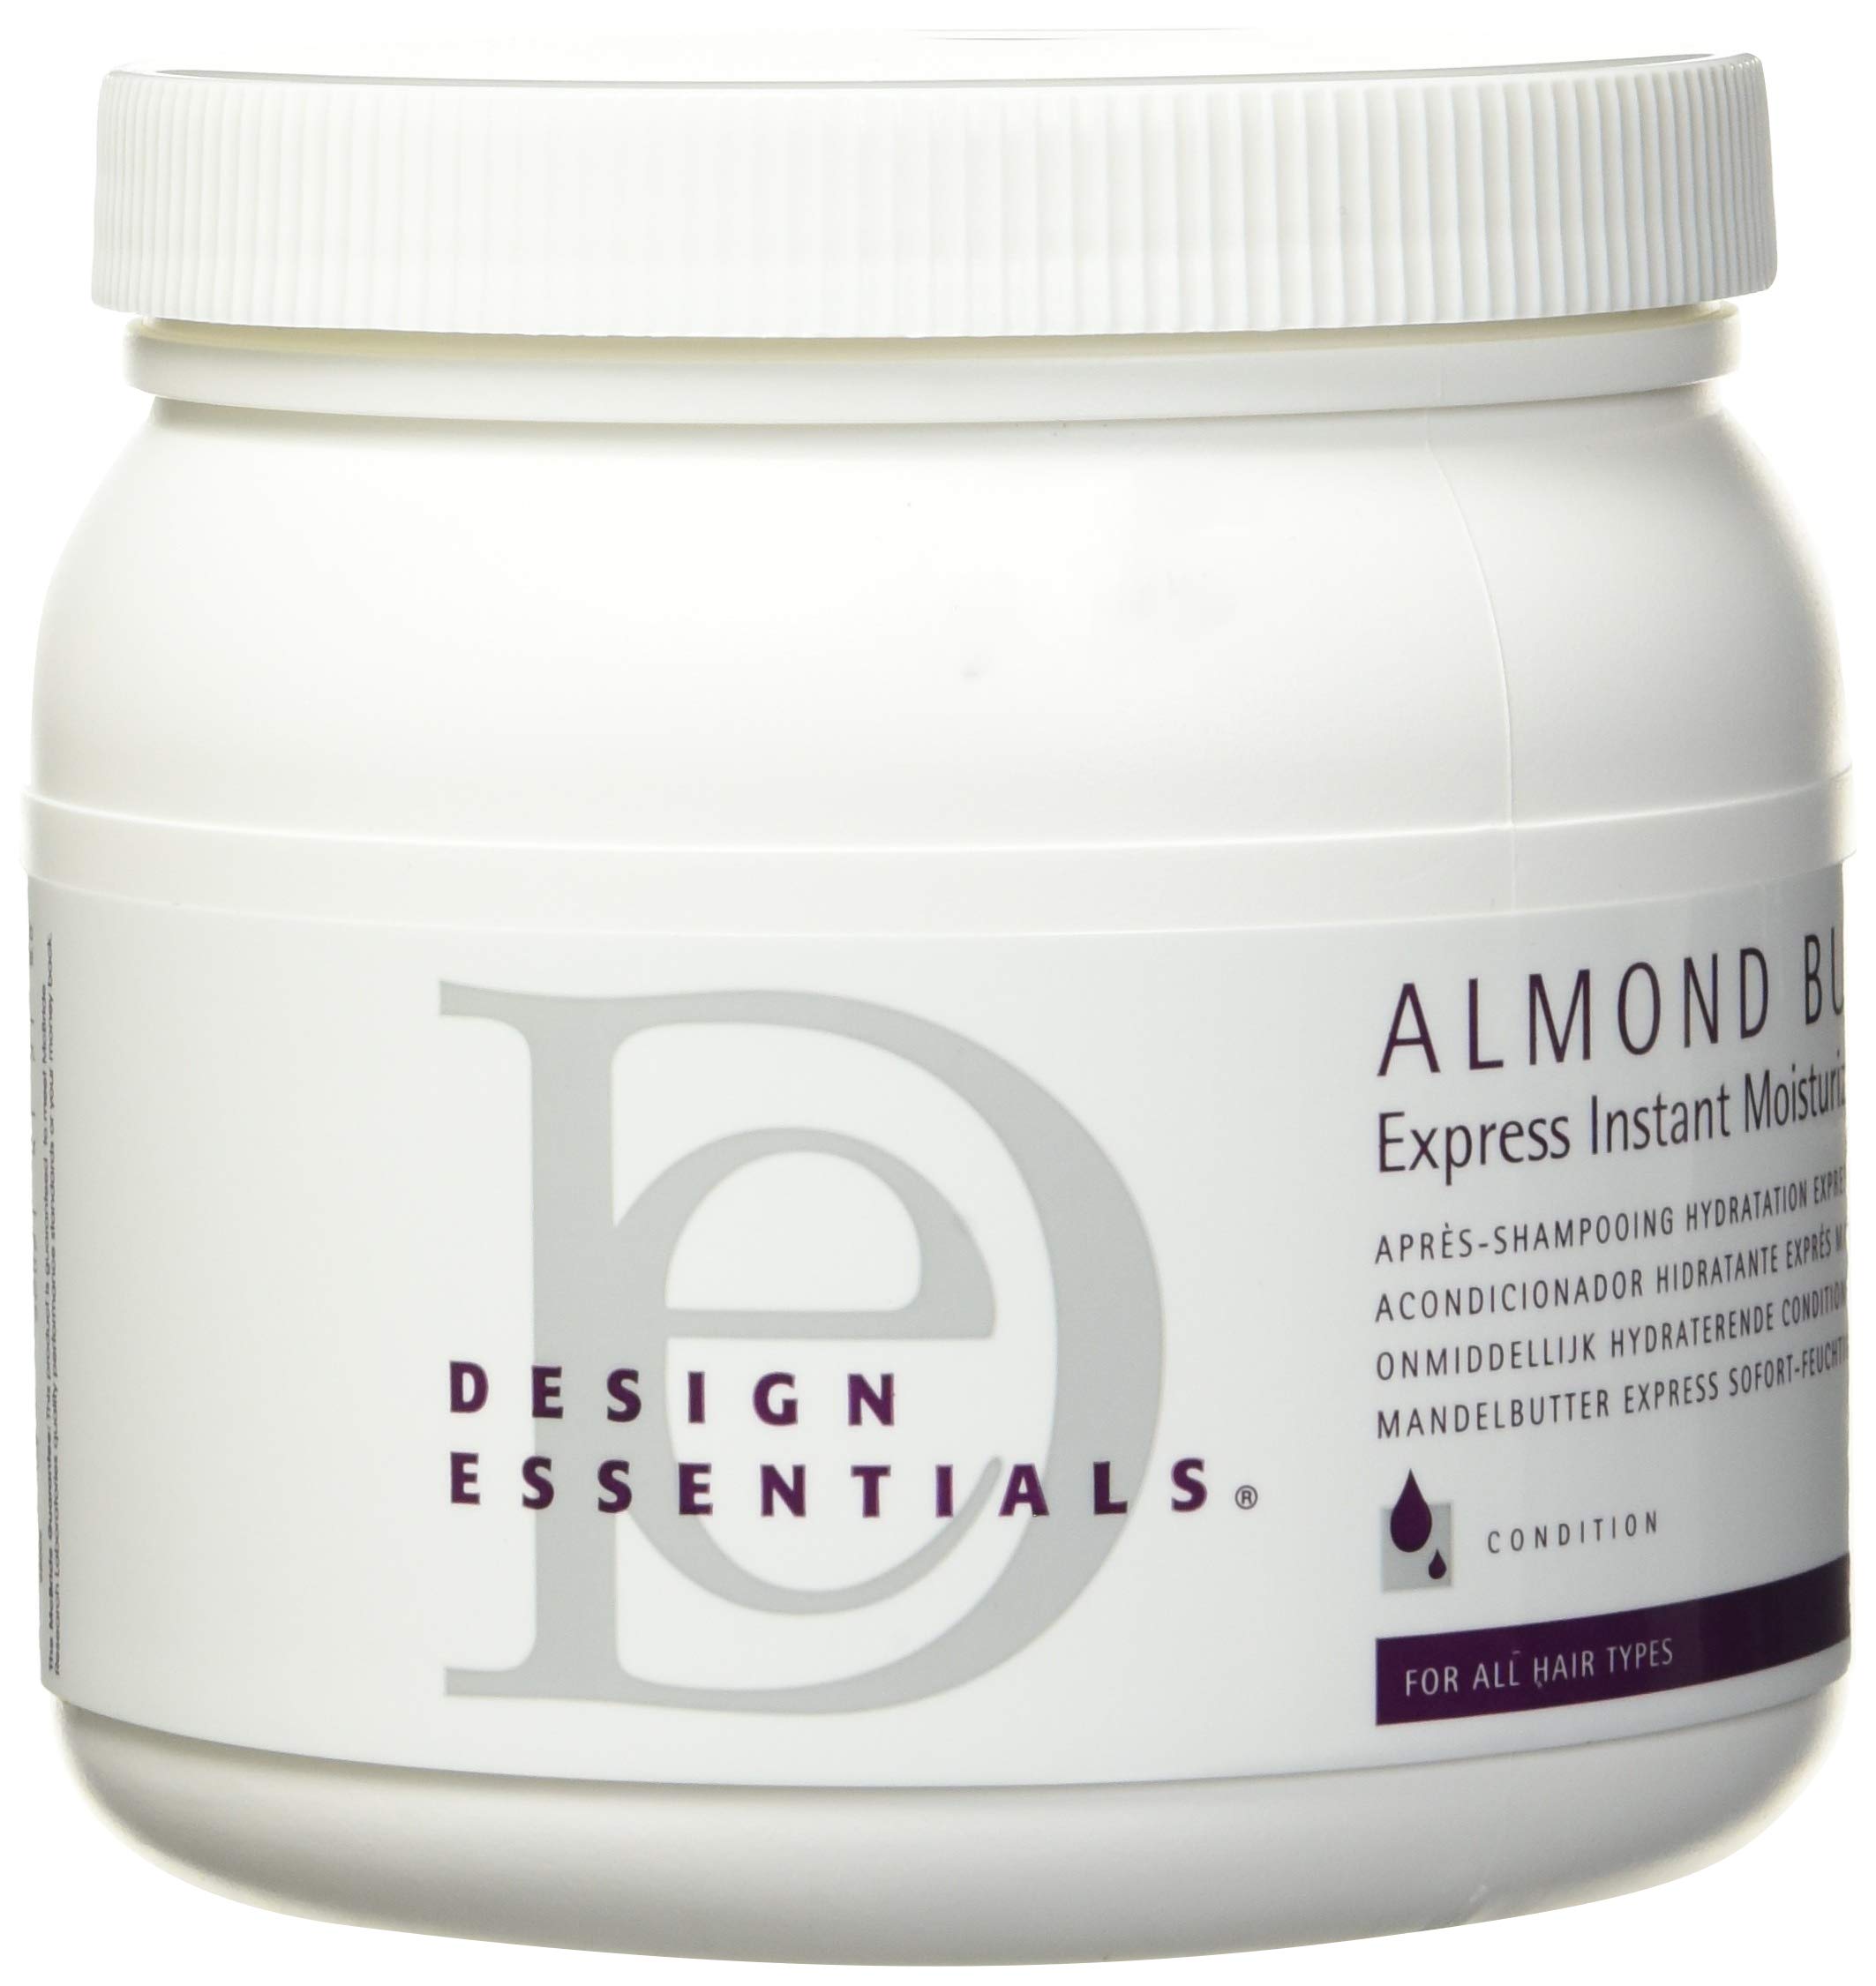 Design Essentials Almond Butter Express Instant Moisturizing Conditioner, 32 Ounces